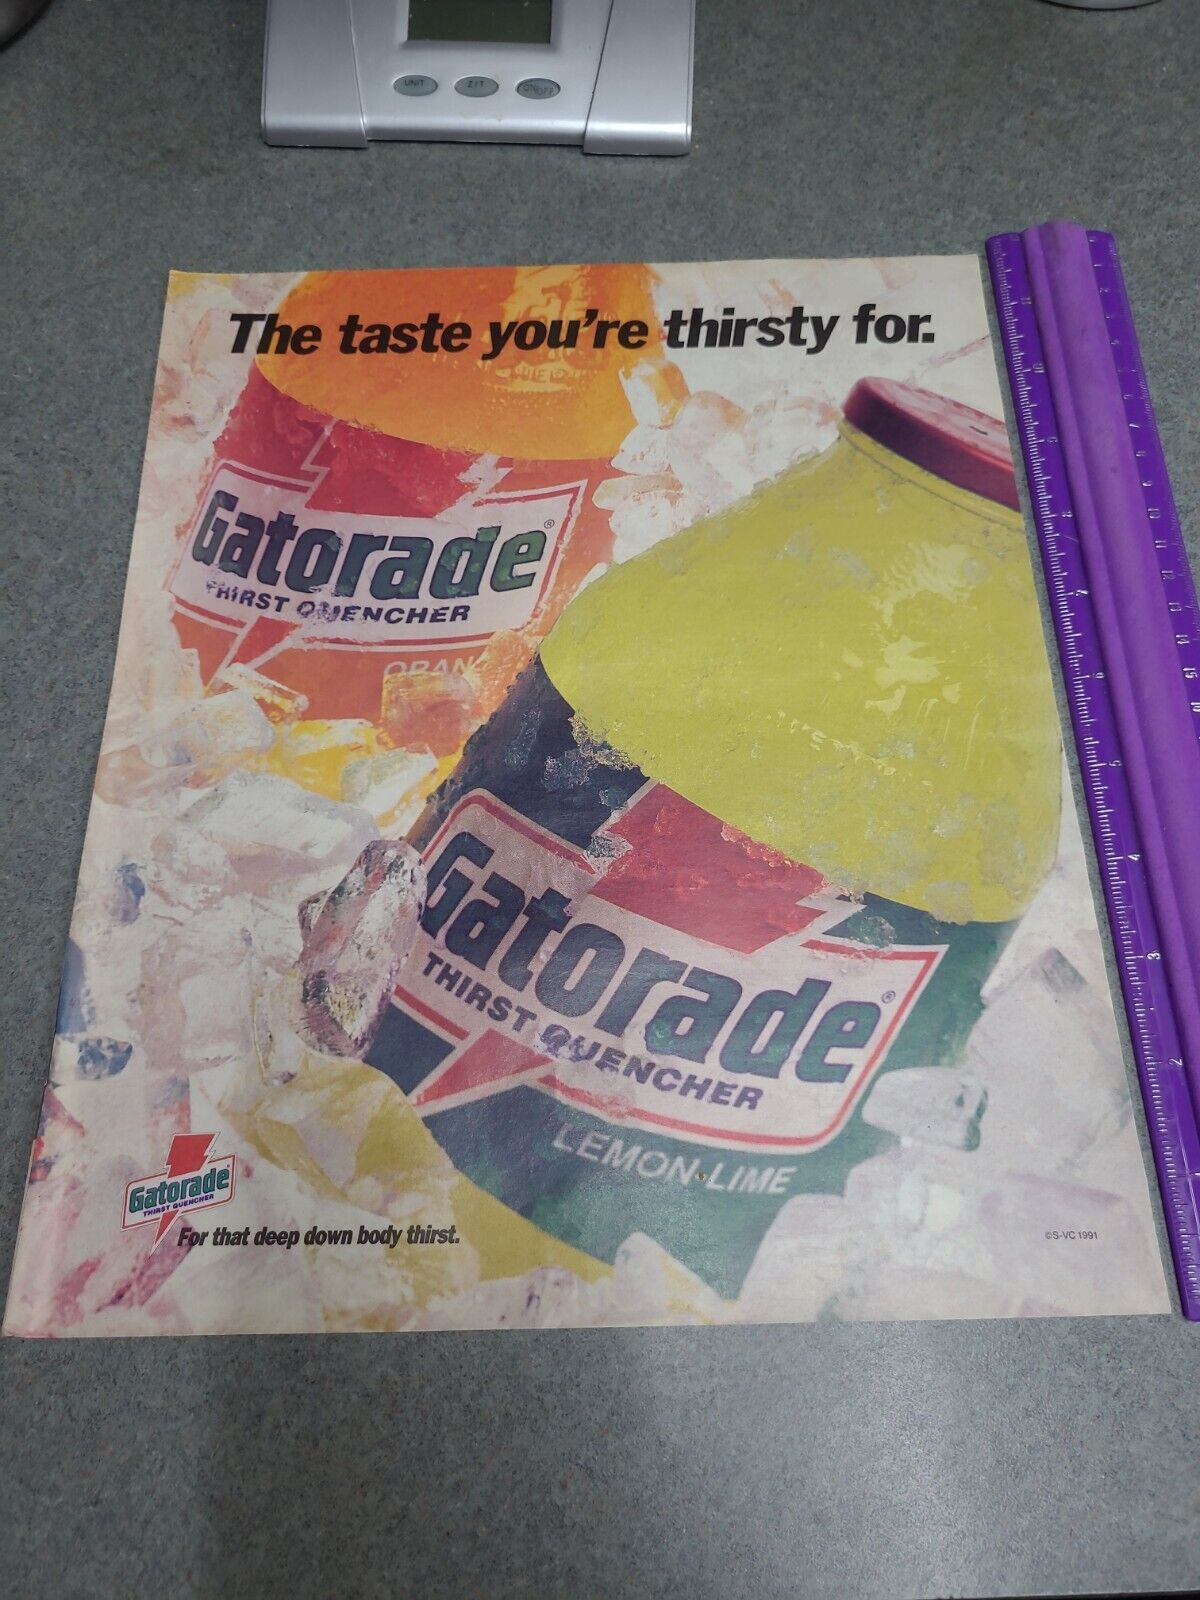 Gatorade Print Ad 1991 Taste You're Thirsty For